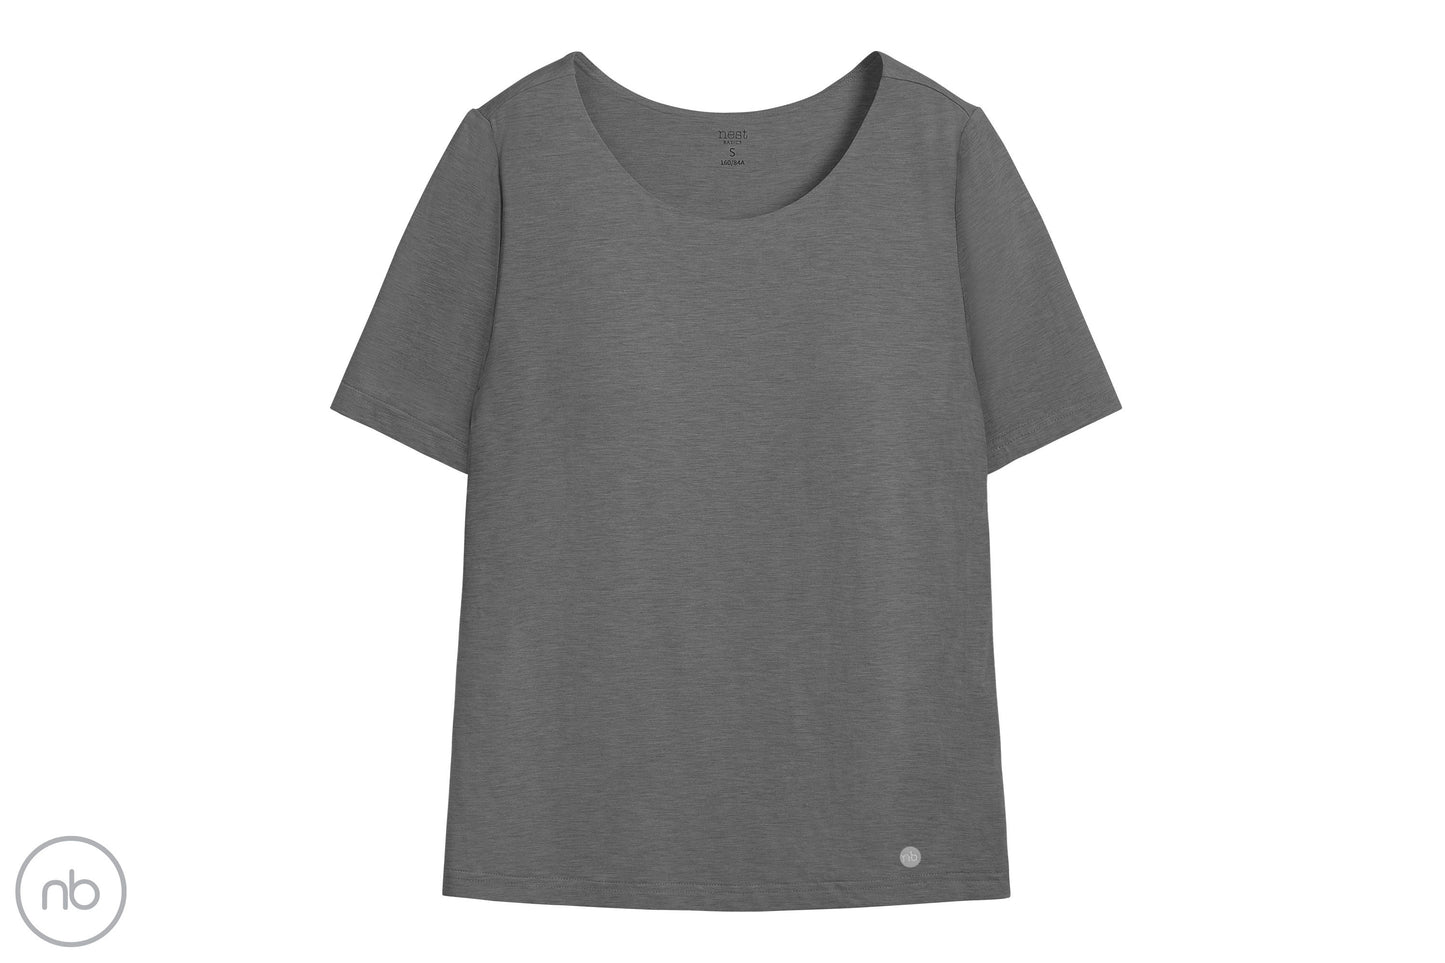 Basics Women's Bra T-Shirt (Bamboo) - Charcoal